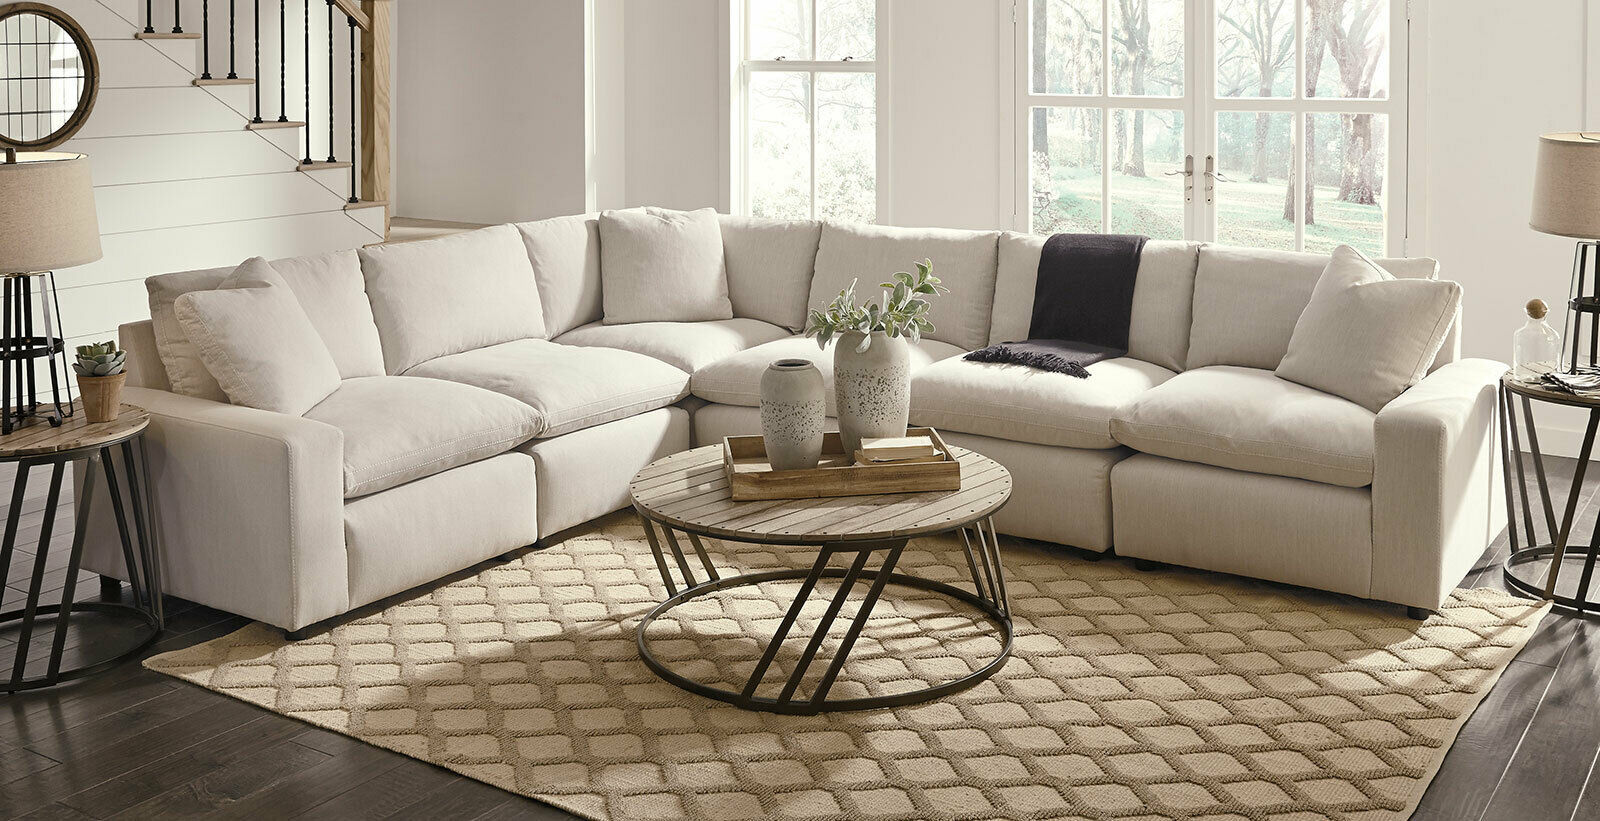 modular furniture for living room